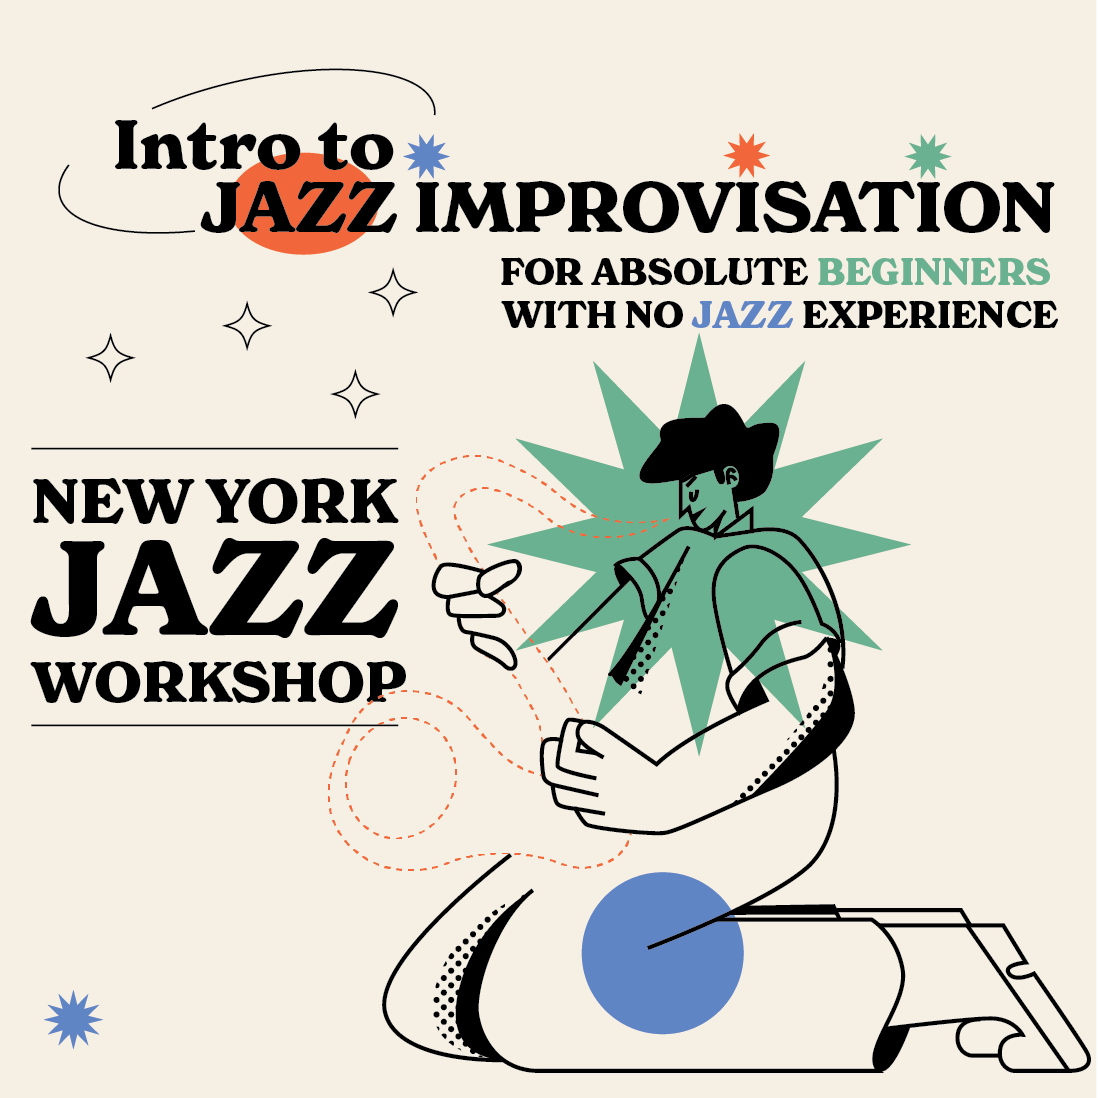 Intro to Jazz Improv